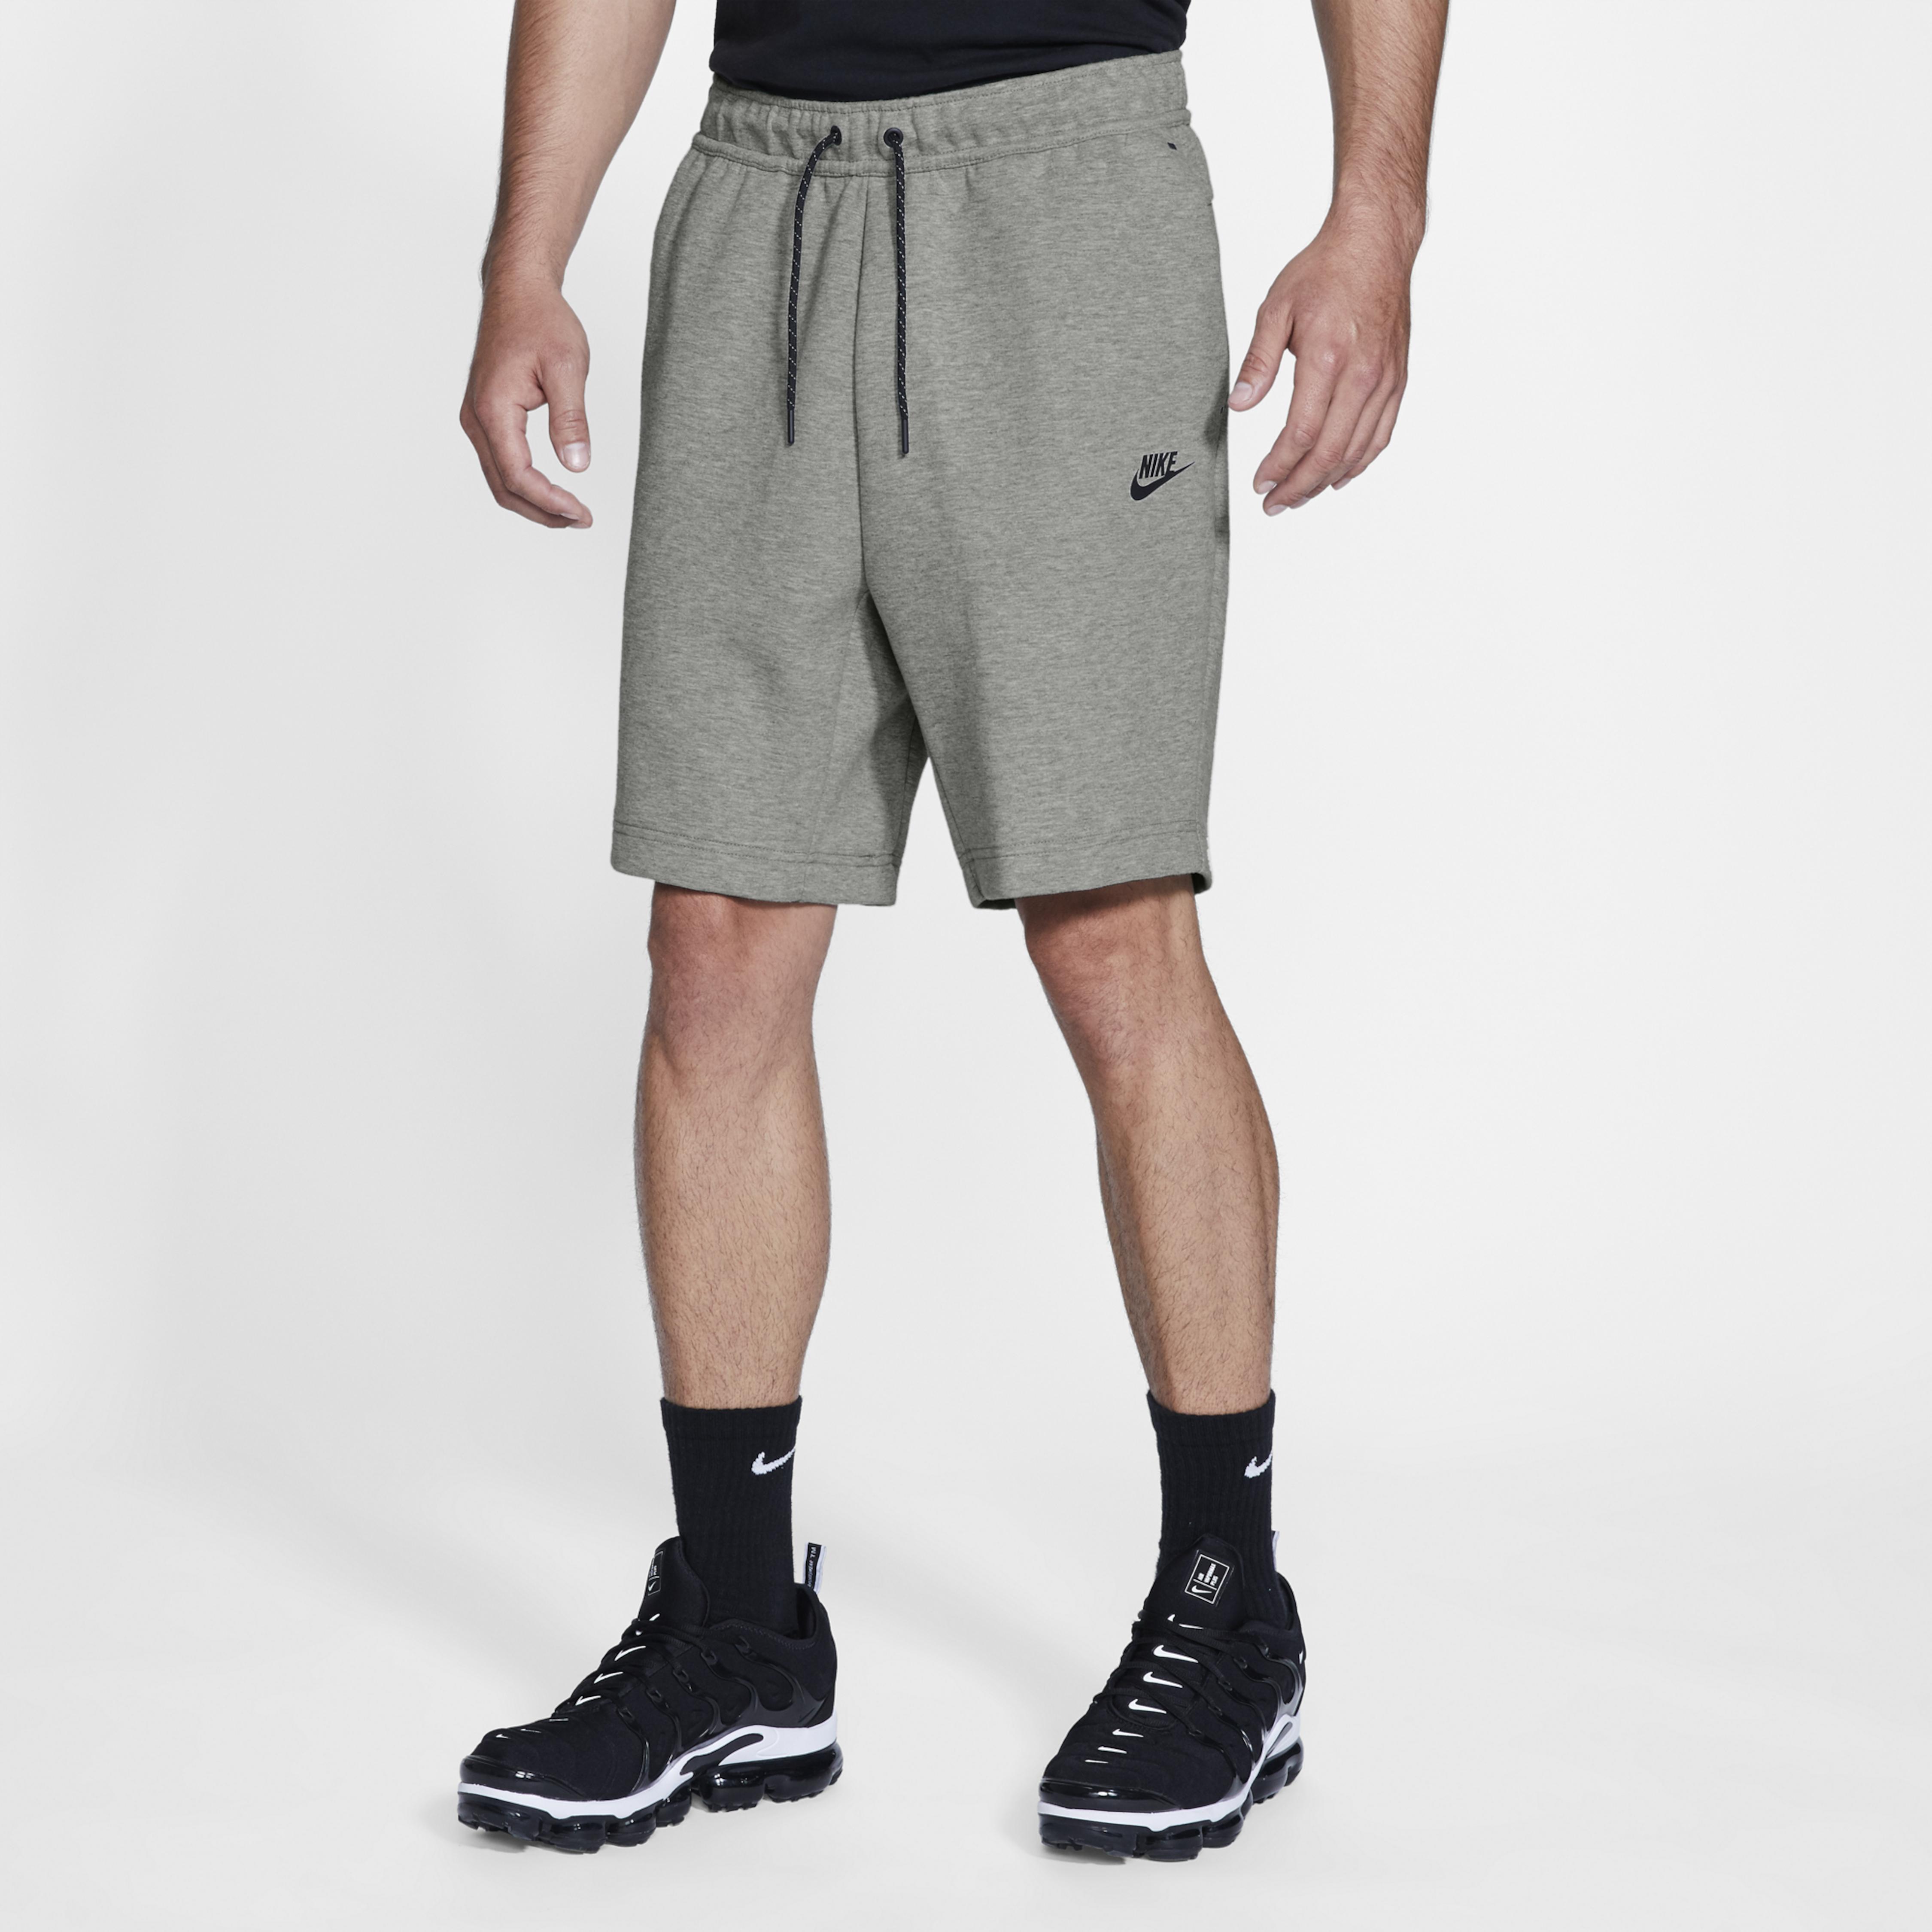 Nike Tech Fleece Shorts in Dark Grey Heather/Black (Gray) for Men - Lyst